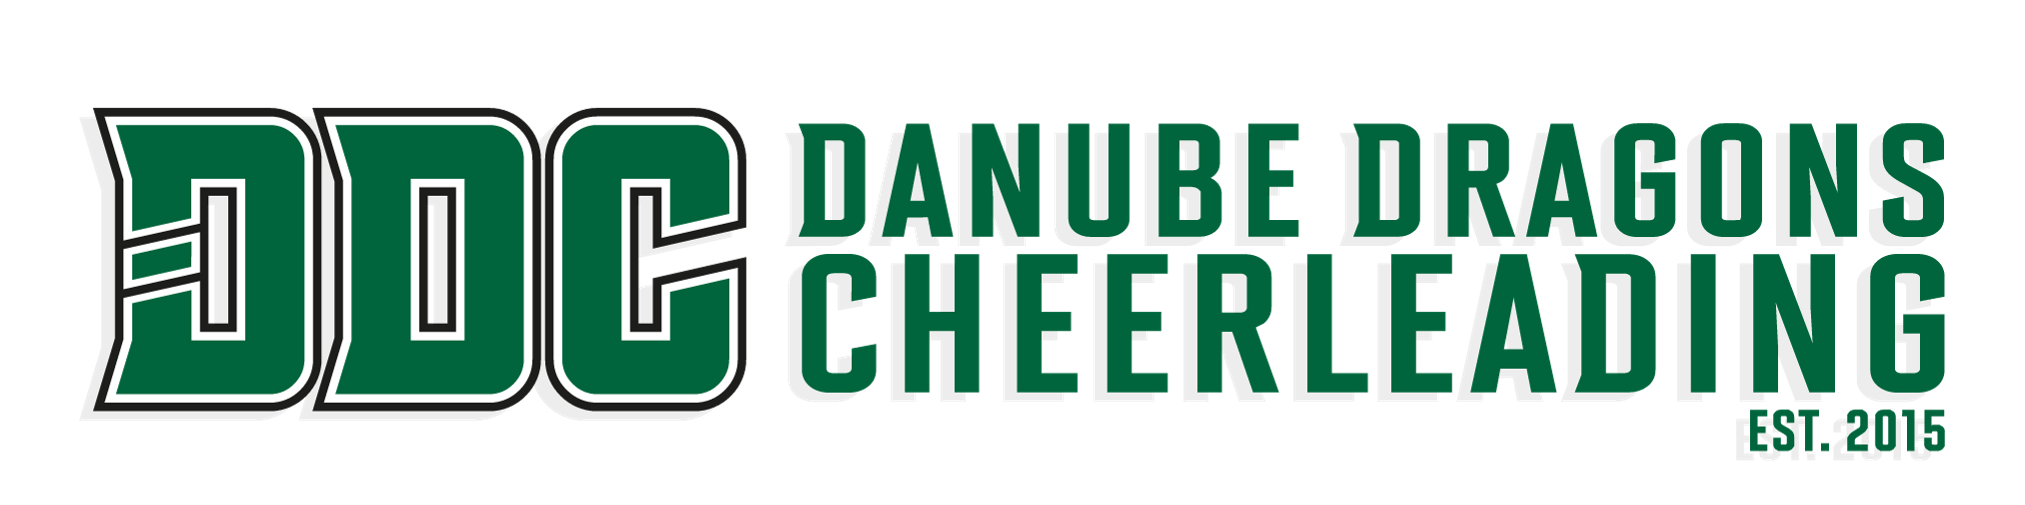 Danube Dragon Cheerleading logo